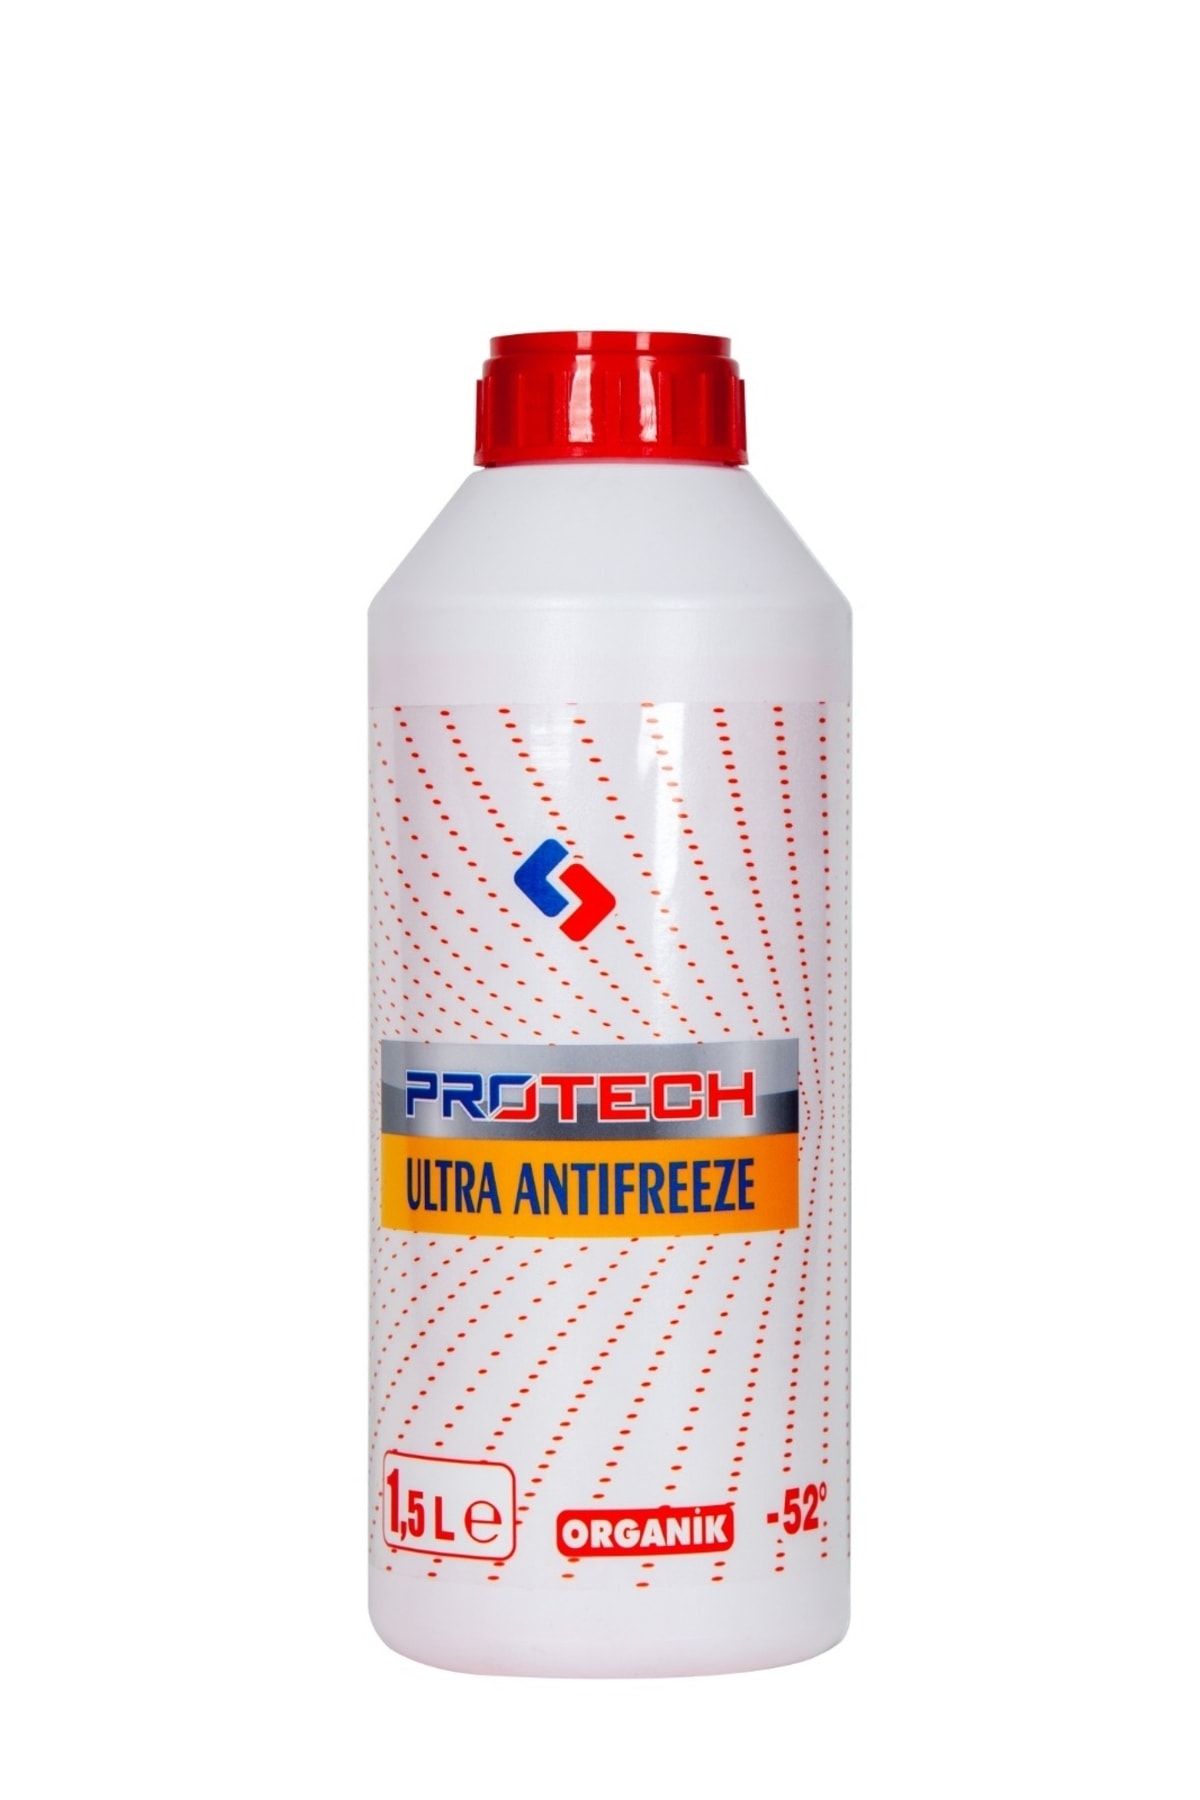 Protech Organik -52 1,5 Litre Ultra Antifriz